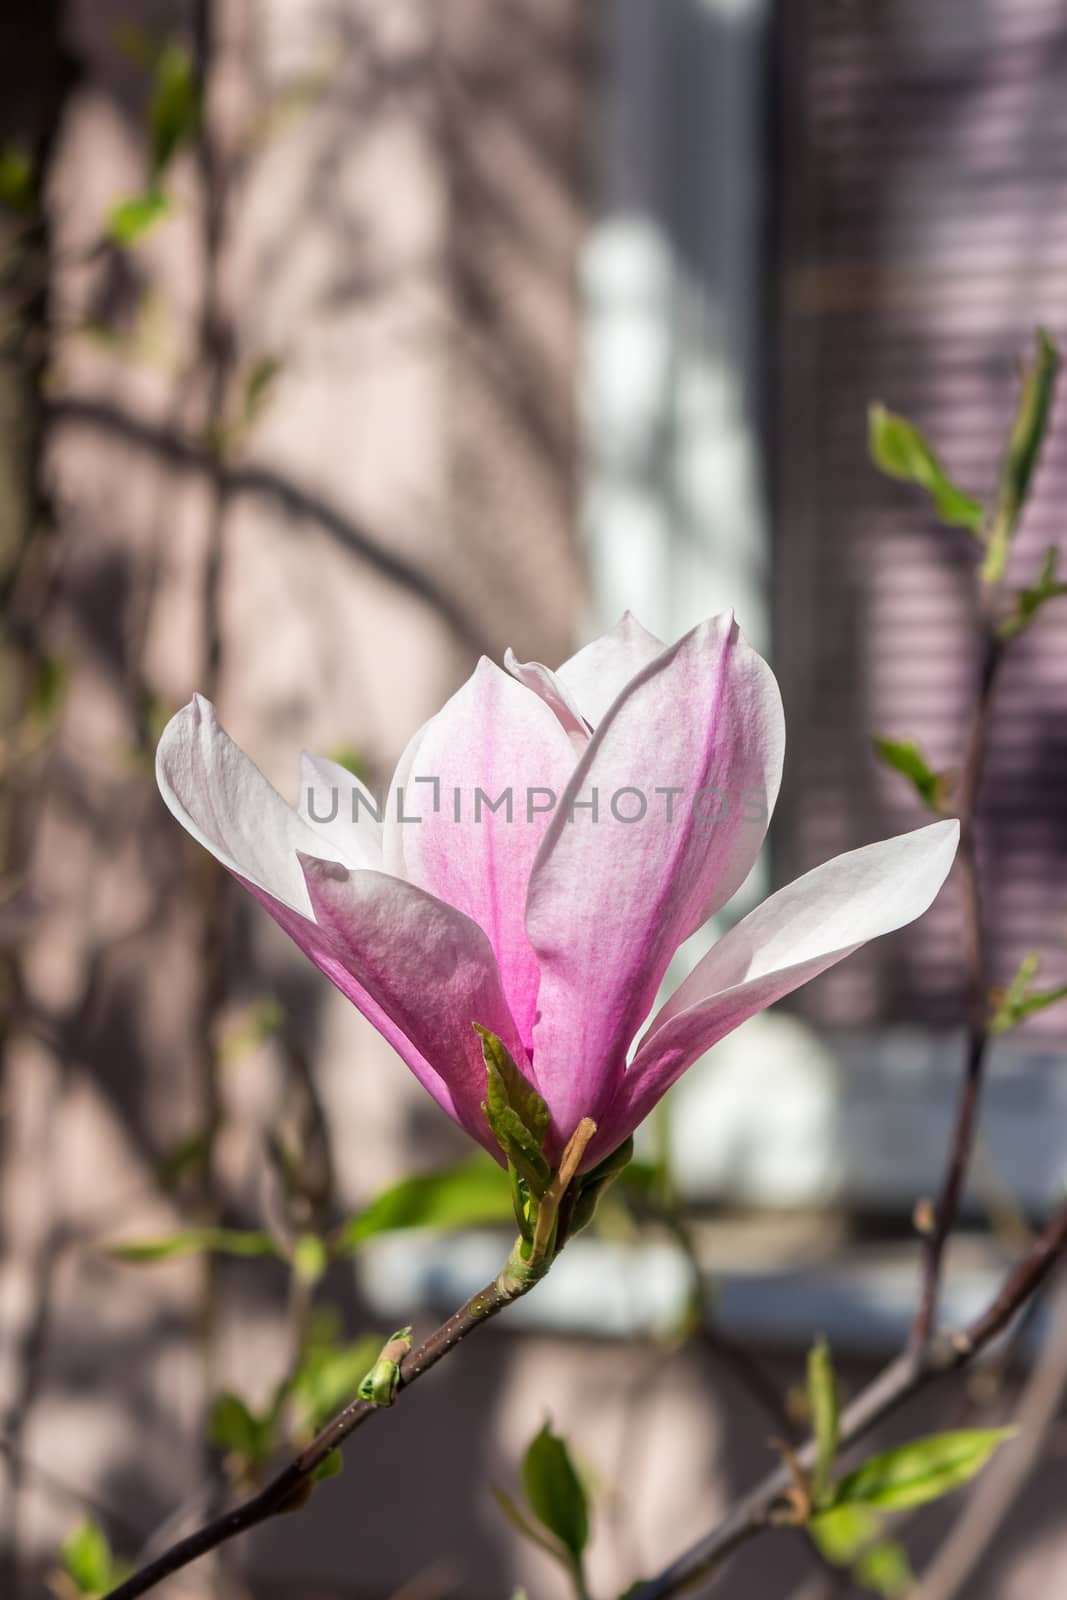 magnolia flower near window by Pellinni